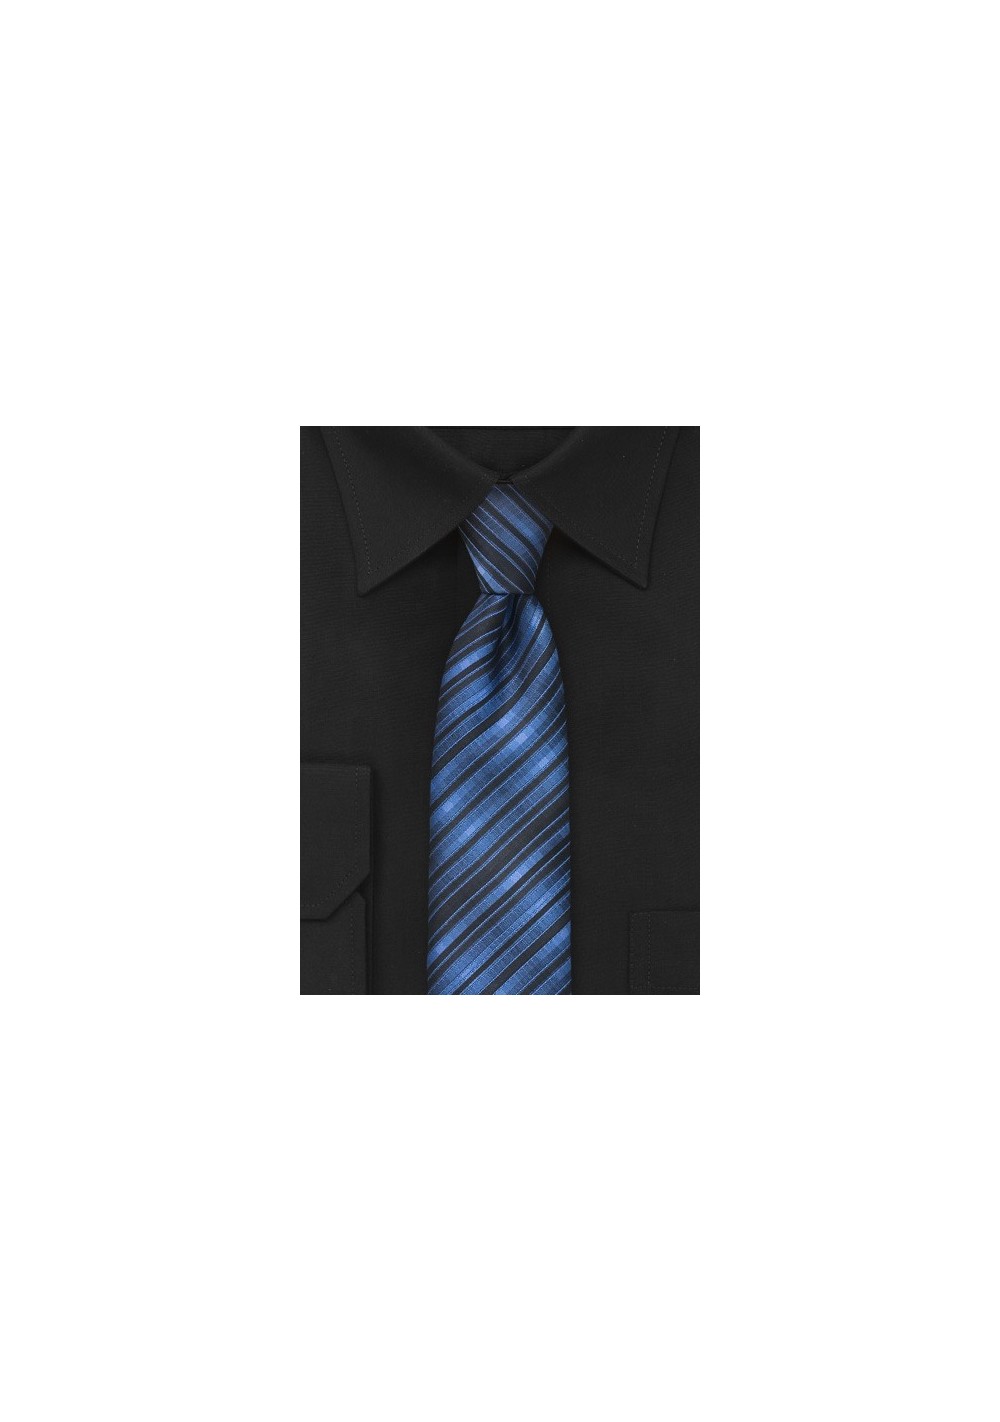 Blue and Black Skinny Tie